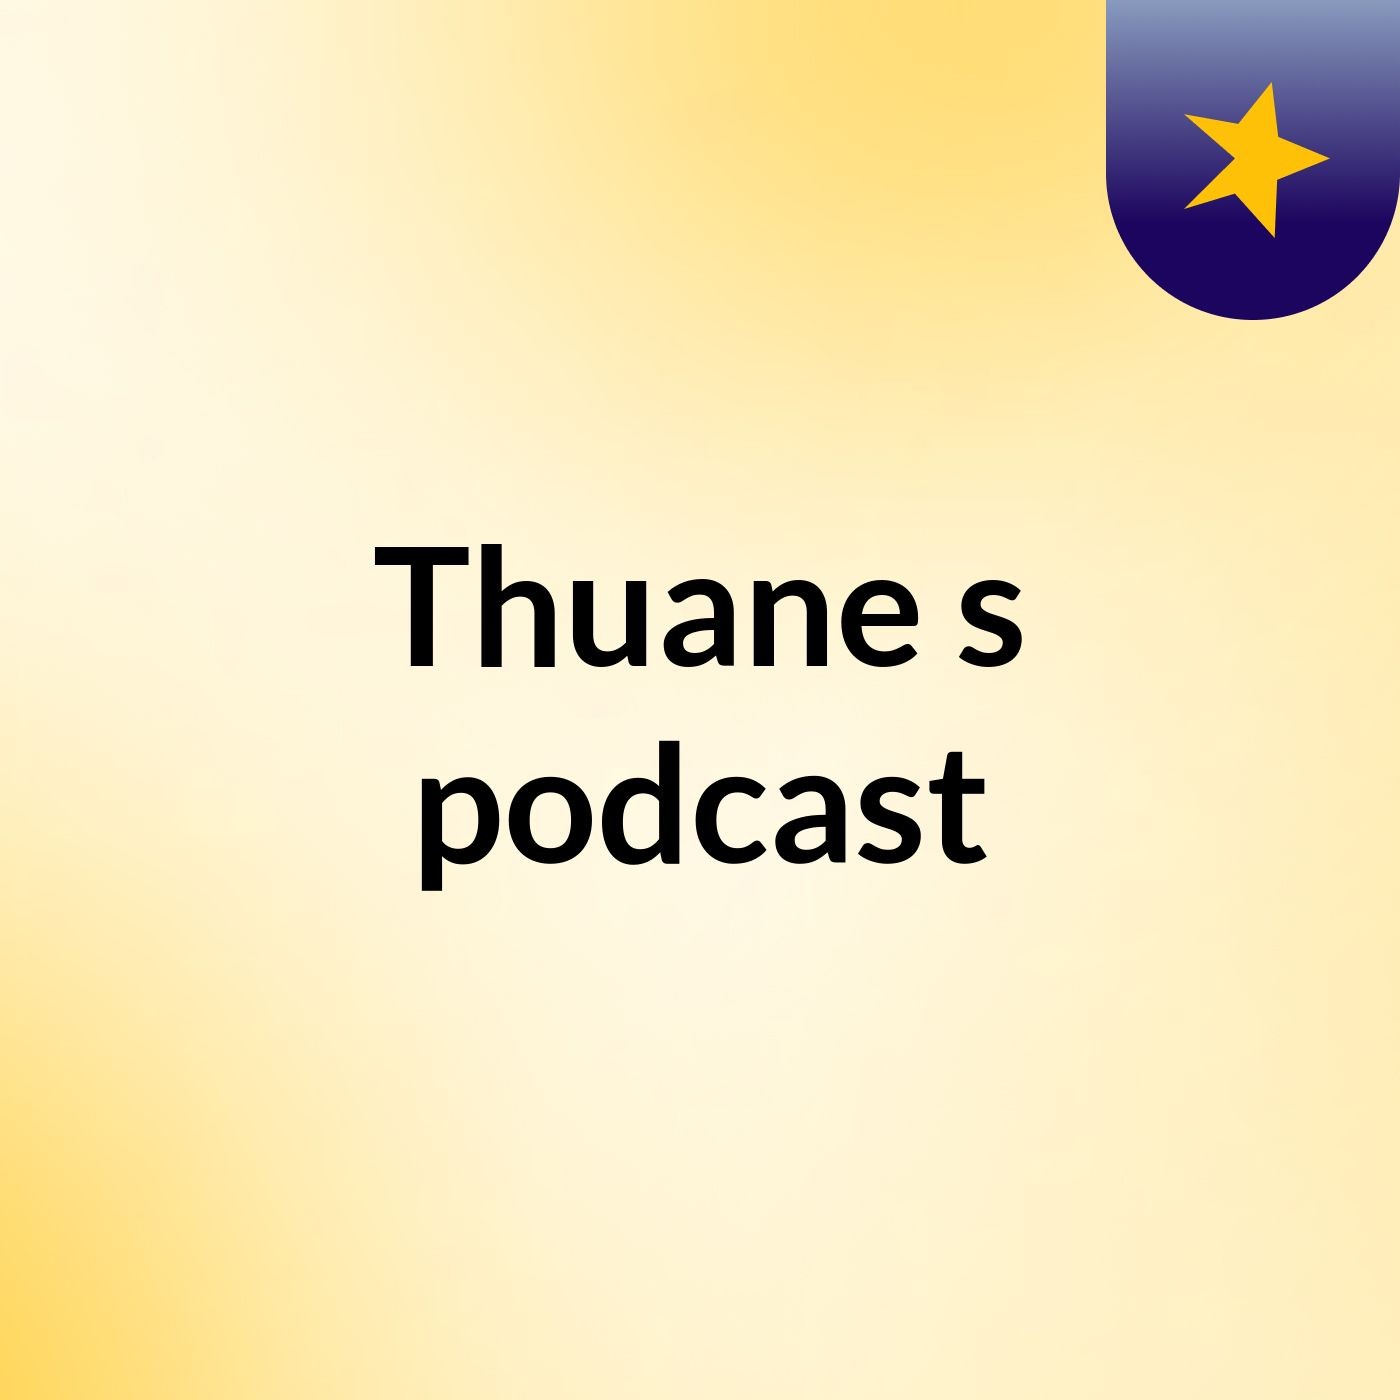 Thuane's podcast